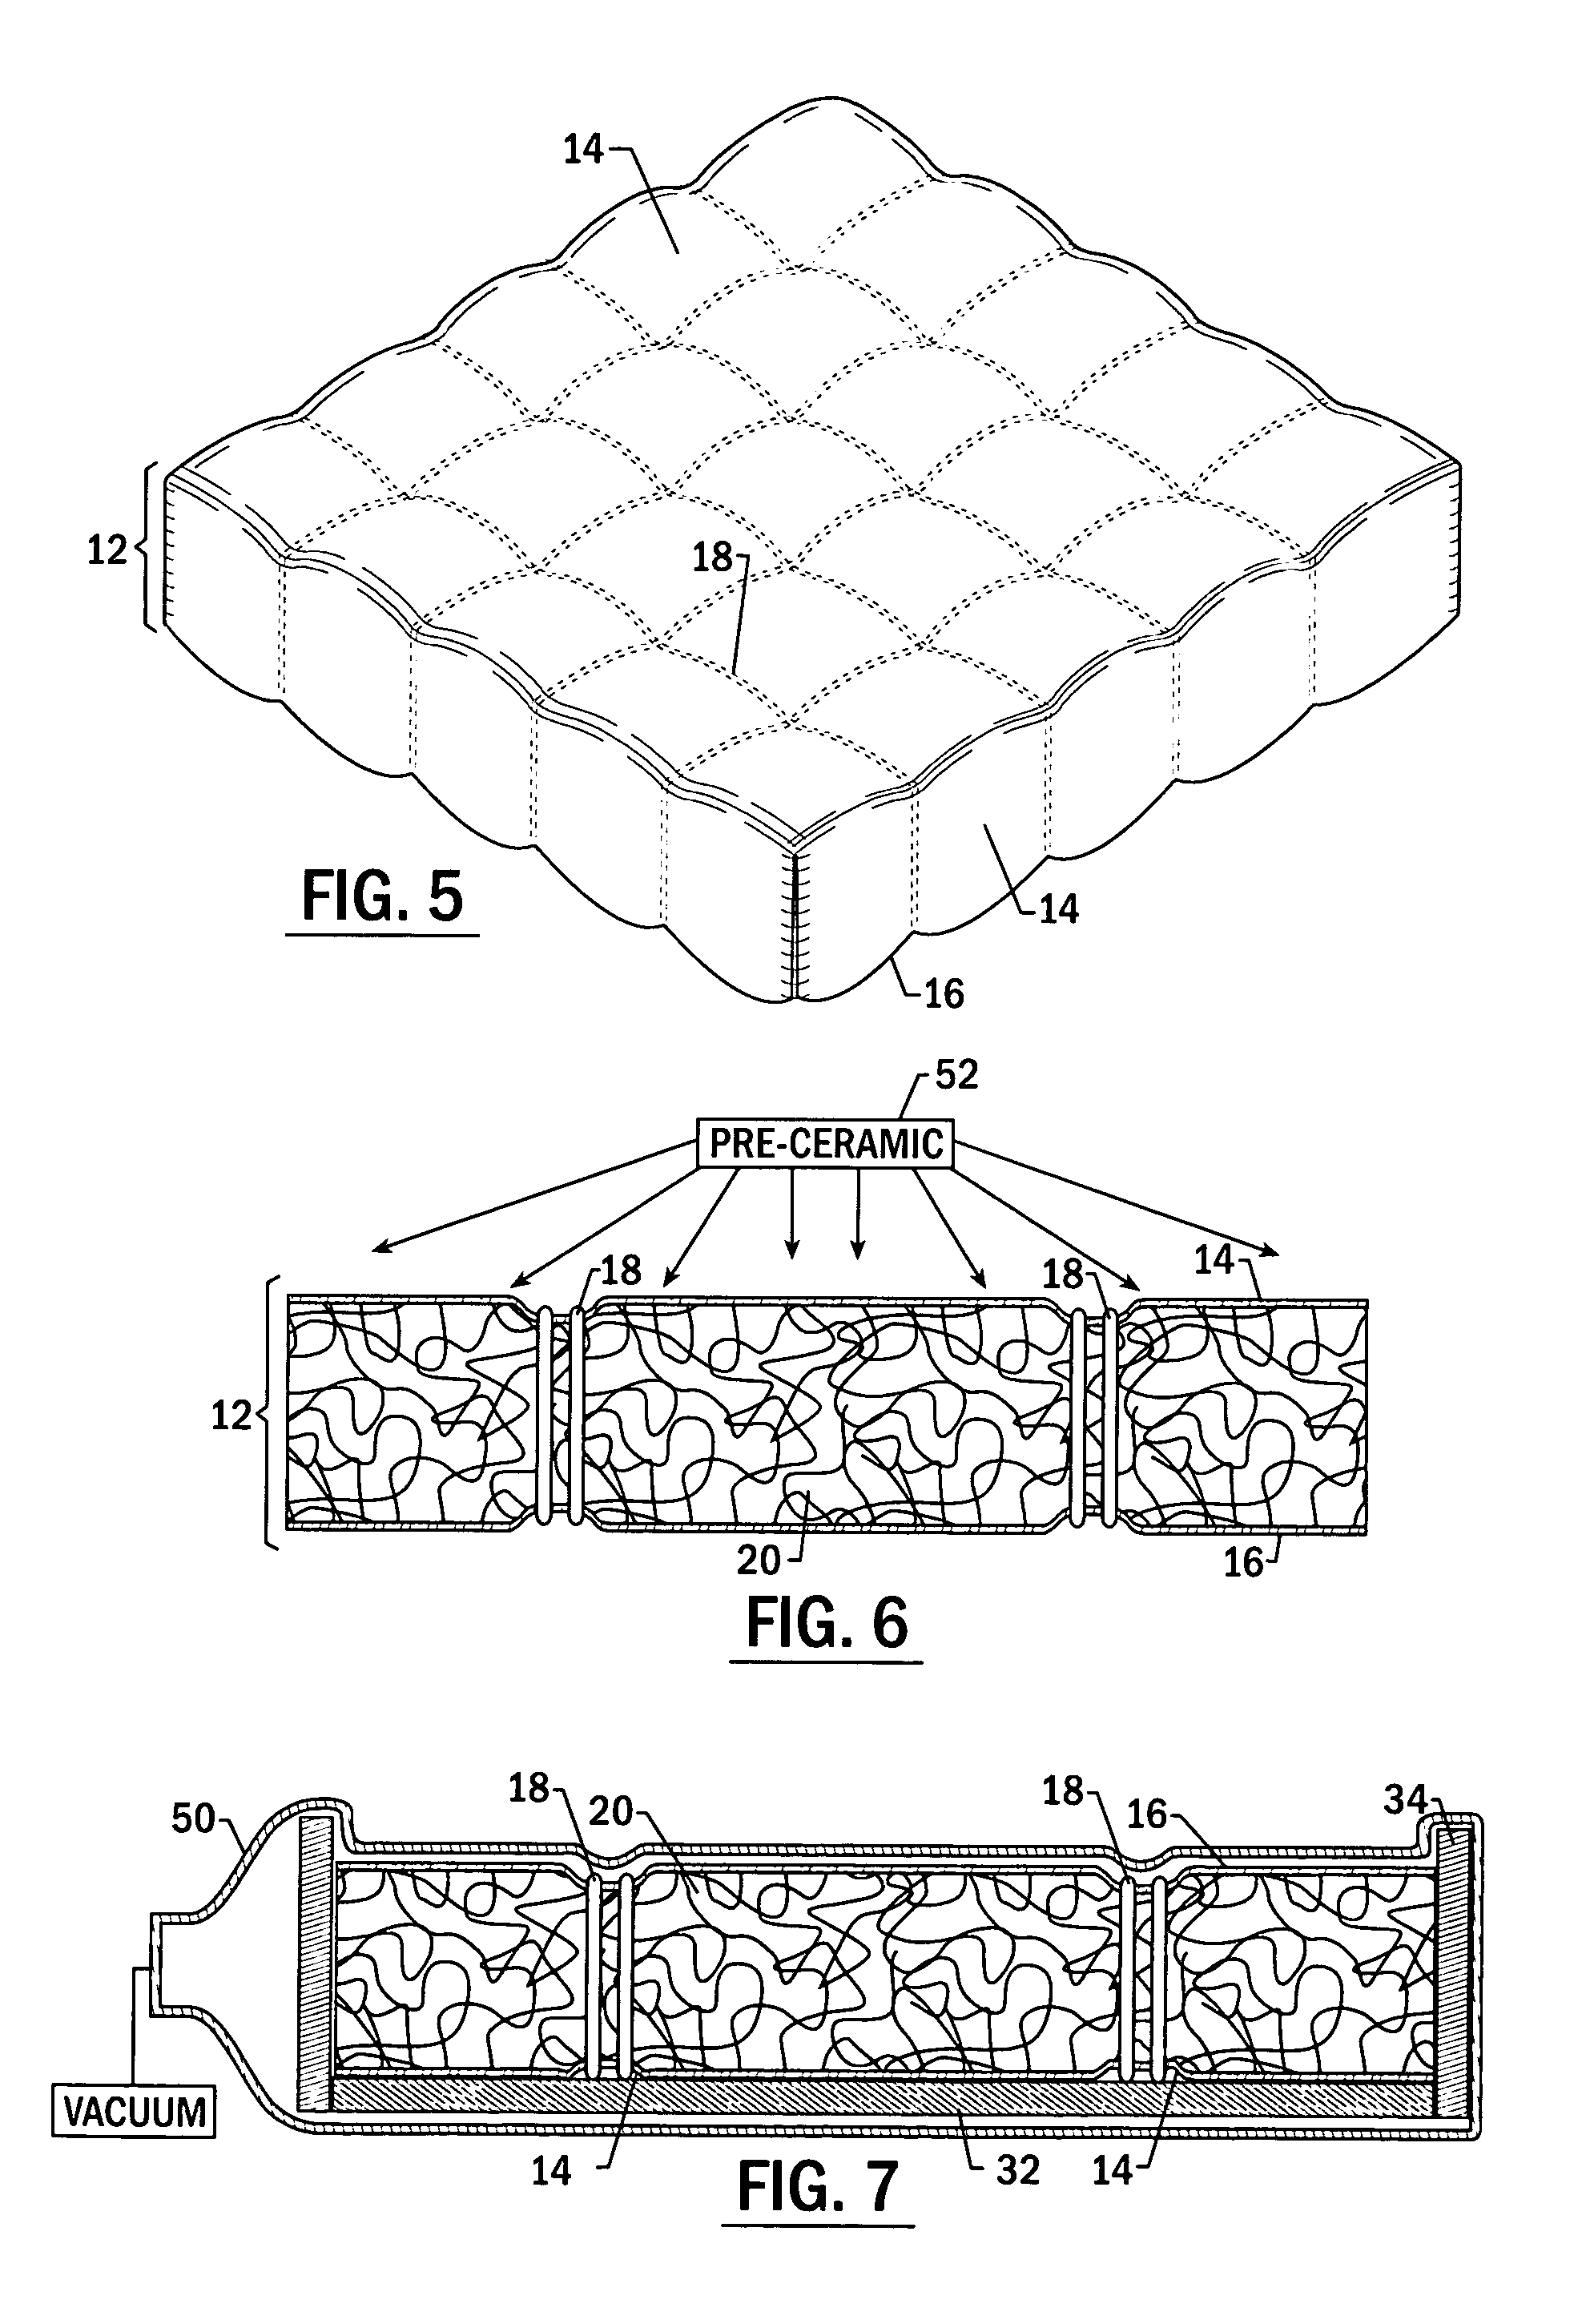 Flexible insulation blanket having a ceramic matrix composite outer layer